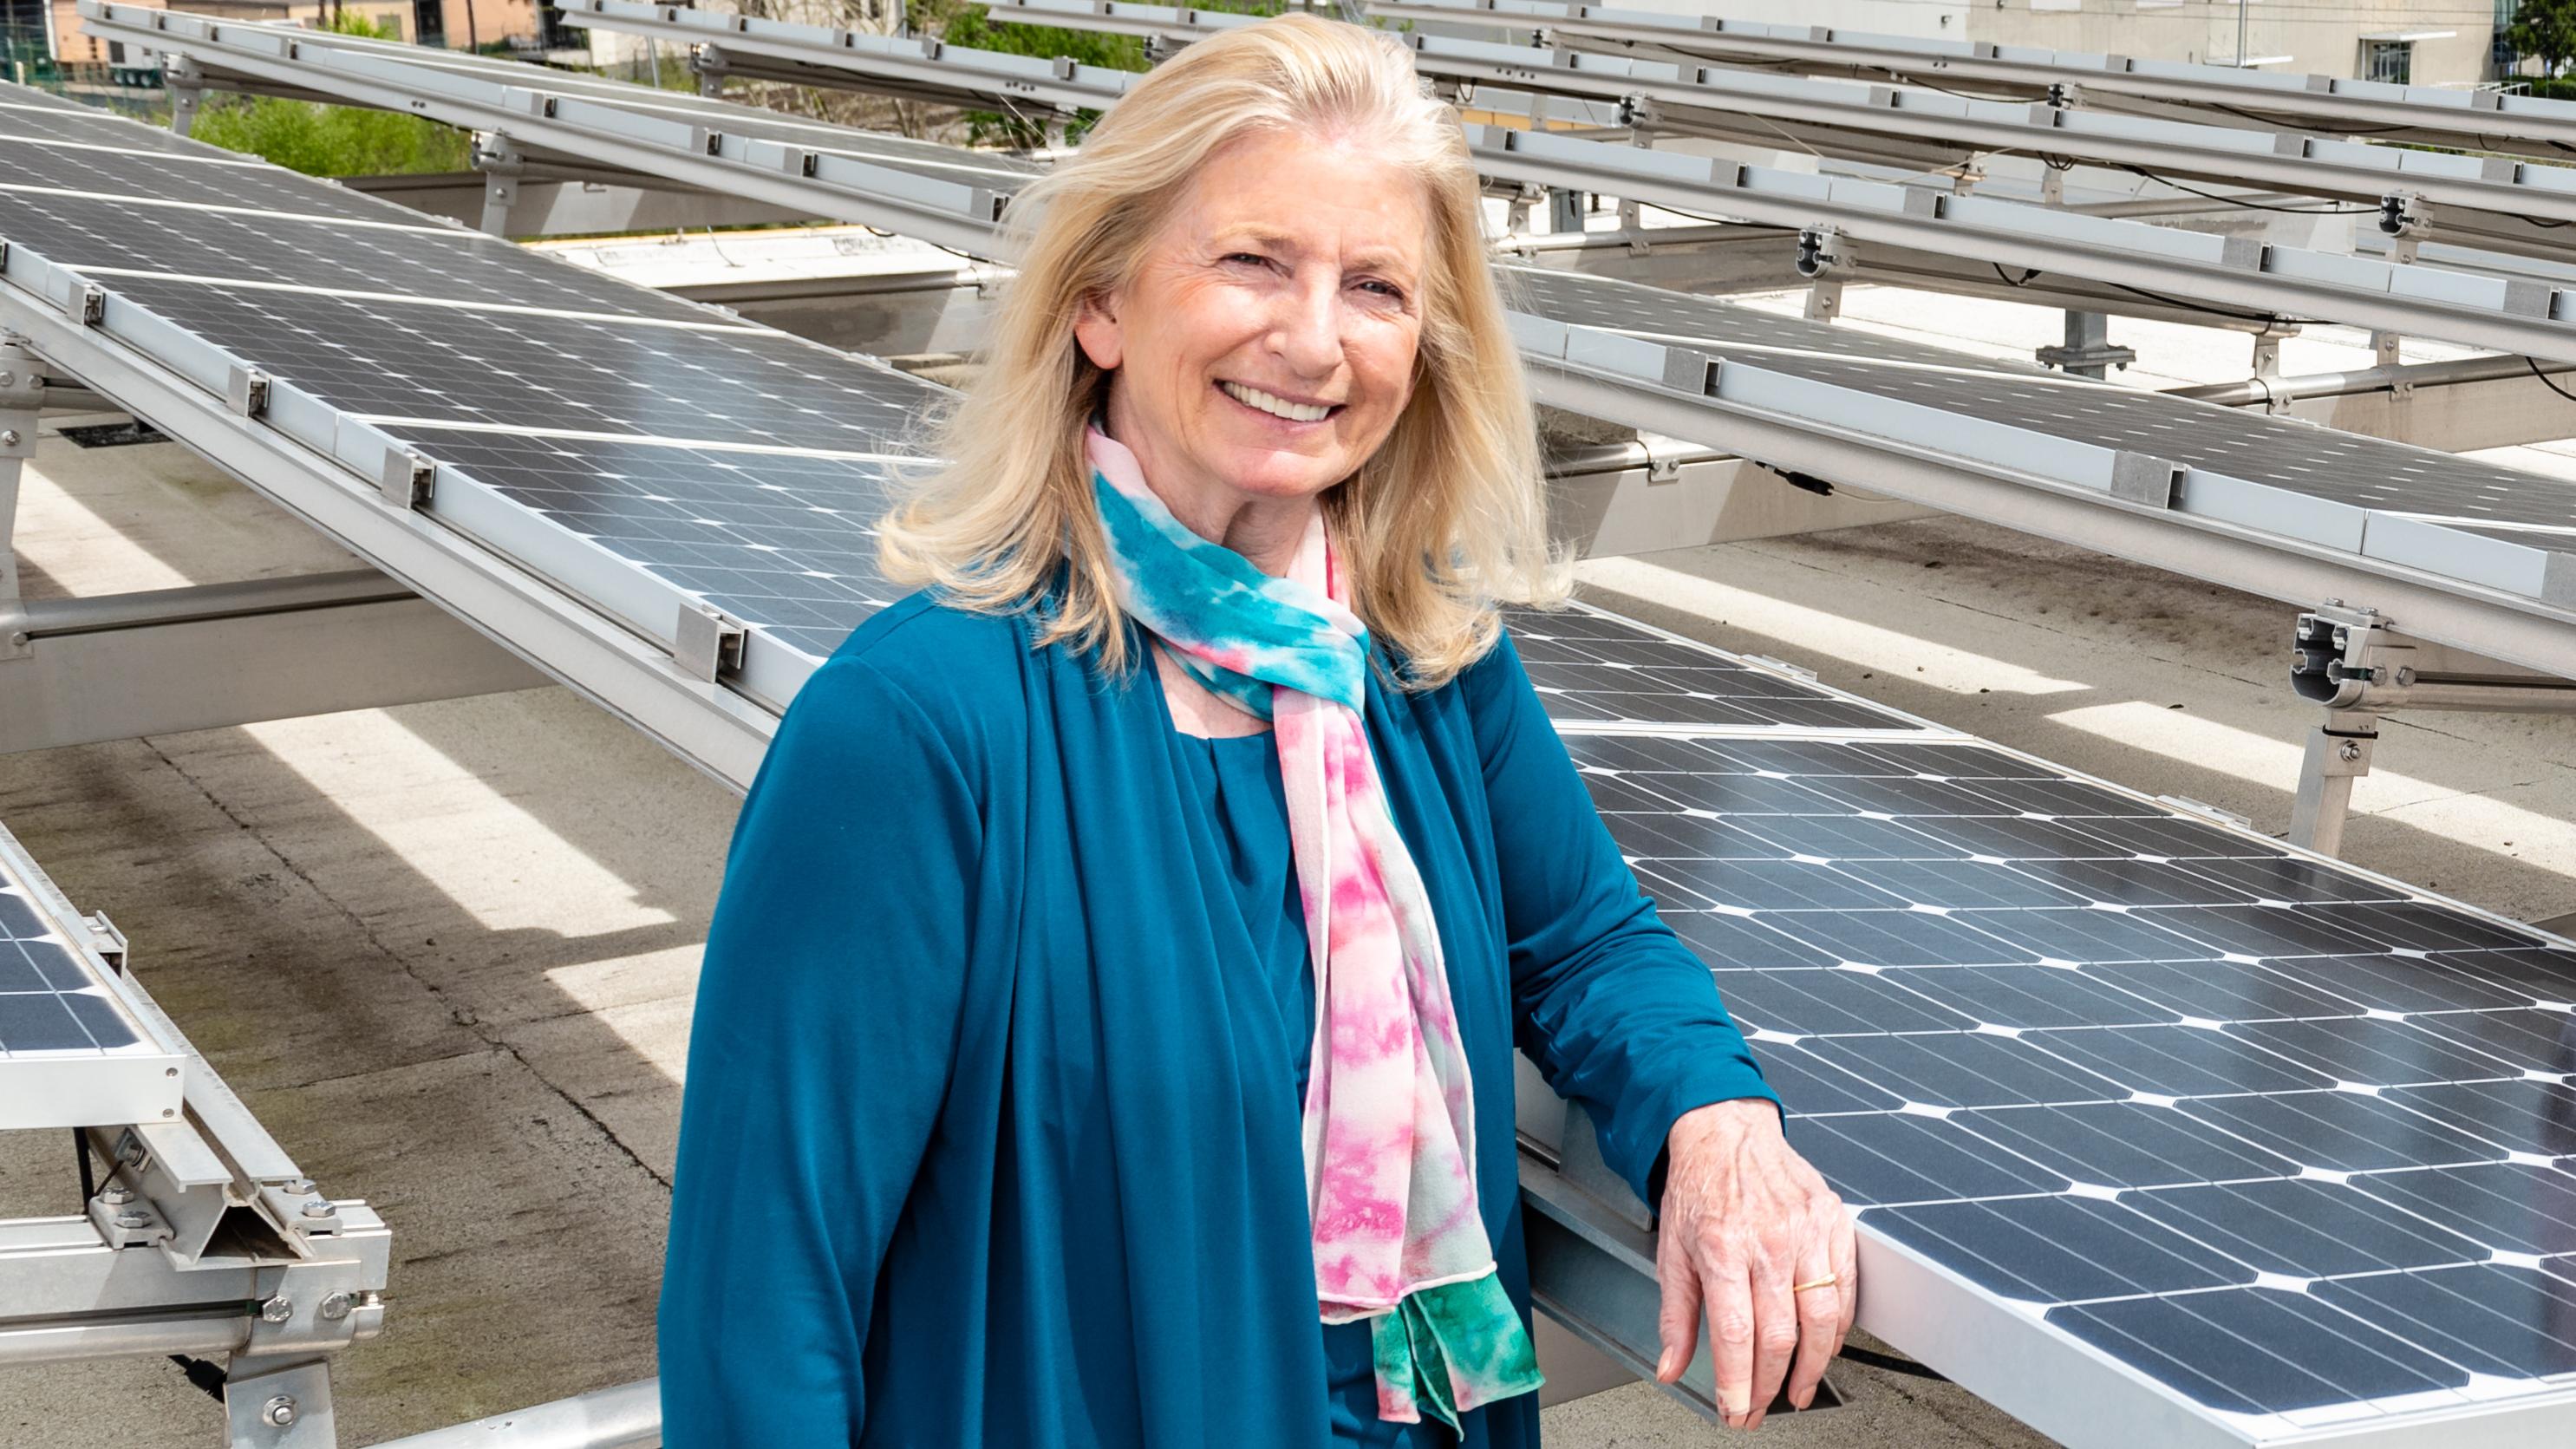 Regents' Professor Marilyn Brown stands among solar panels